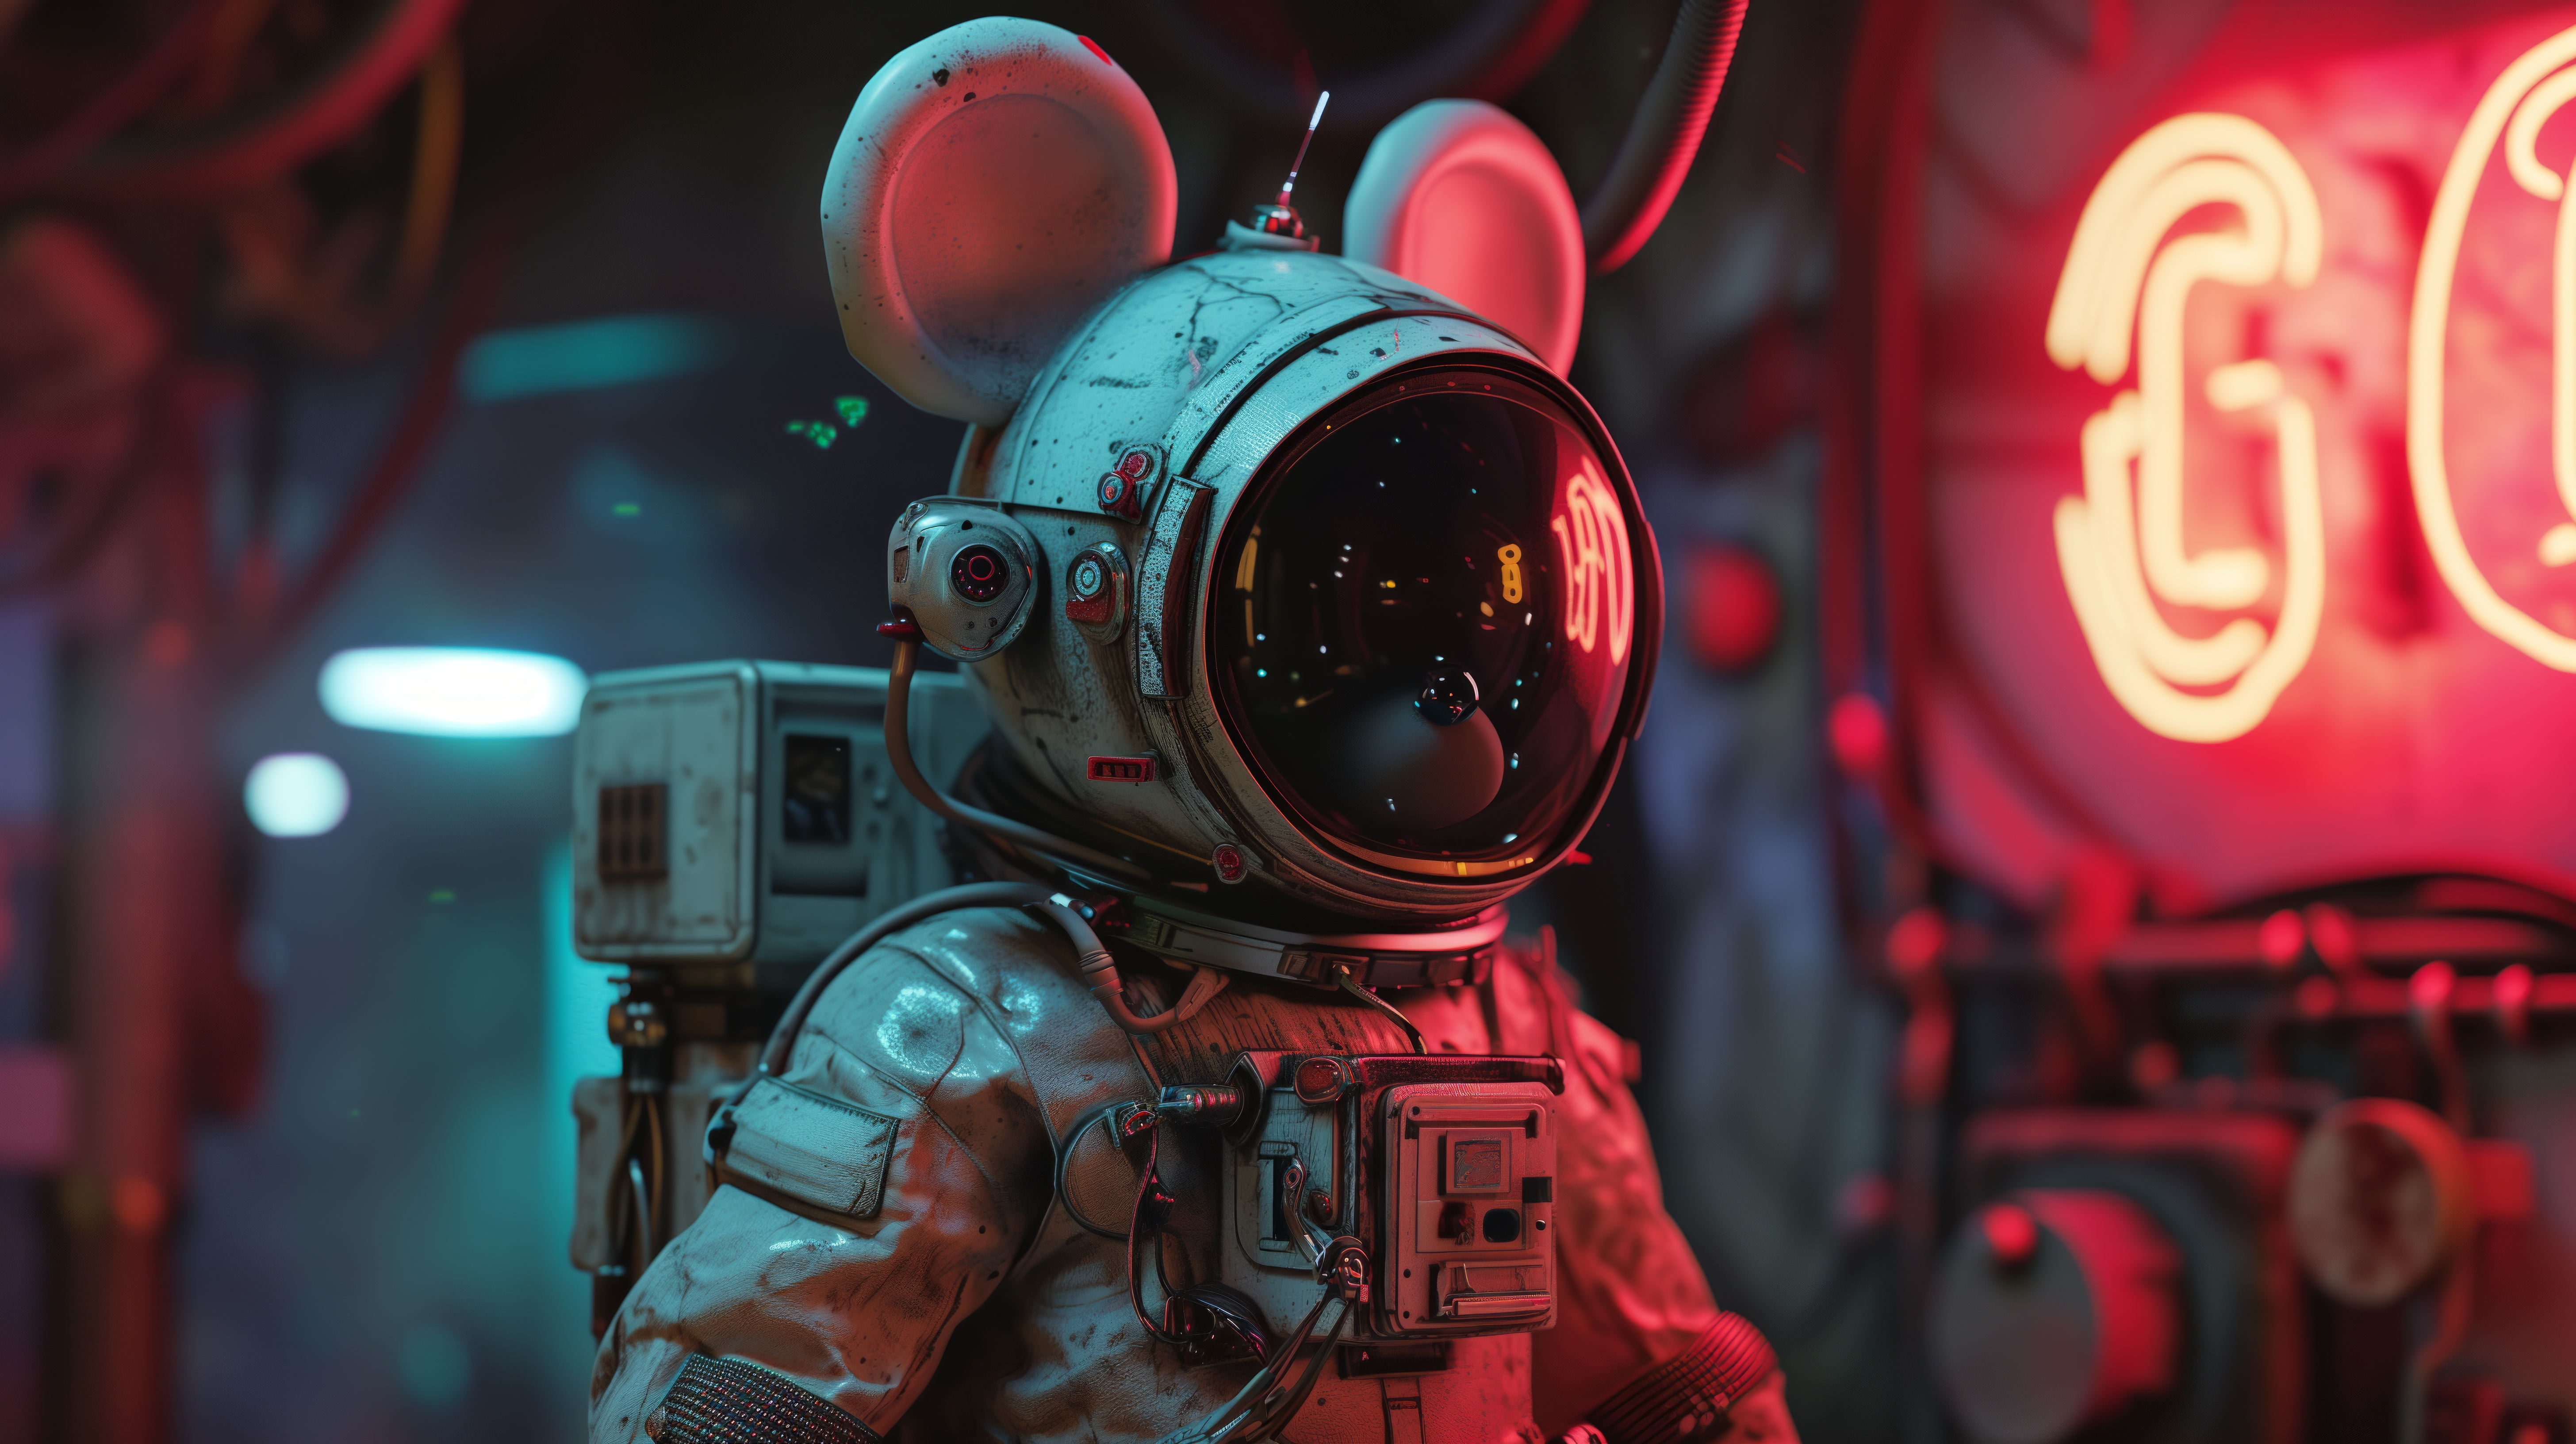 General 5824x3264 AI art cyberpunk depth of field spacesuit astronaut Mickey Mouse neon signs mice digital art mouse ears